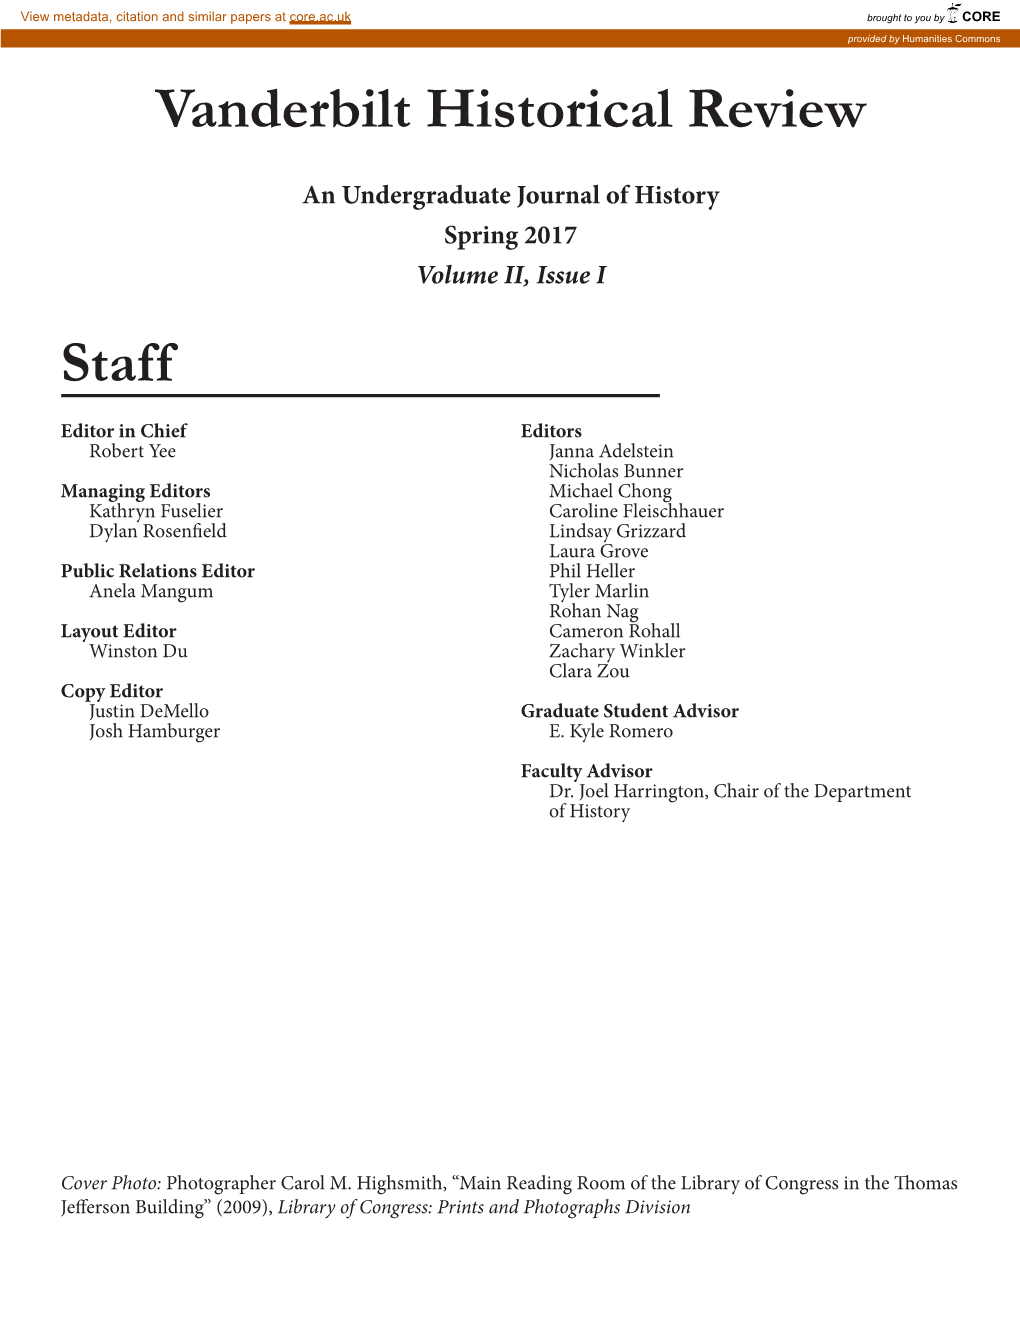 Staff Vanderbilt Historical Review